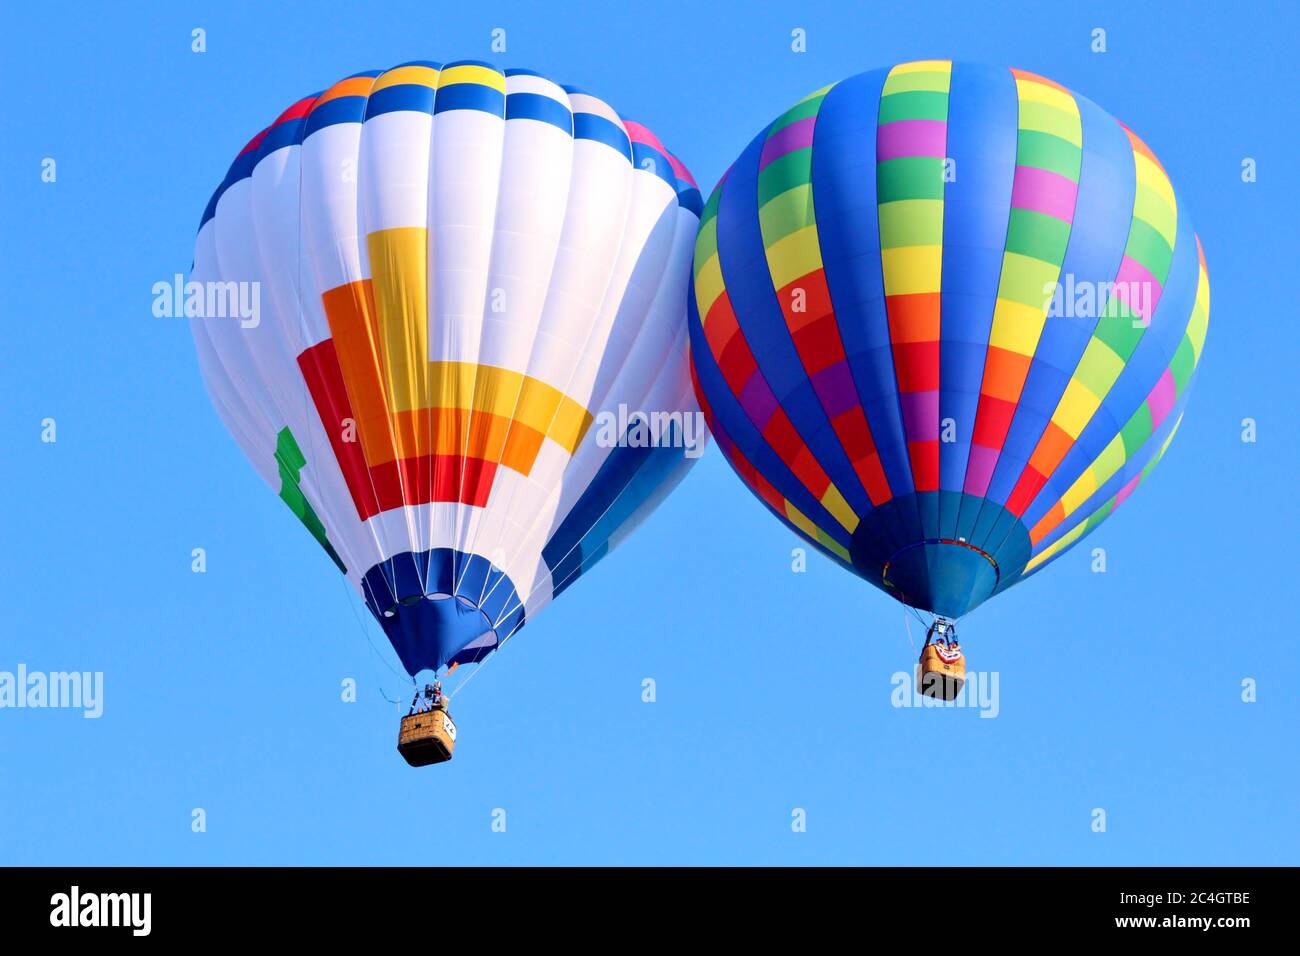 Hot air balloon in a blue sky Stock Photo